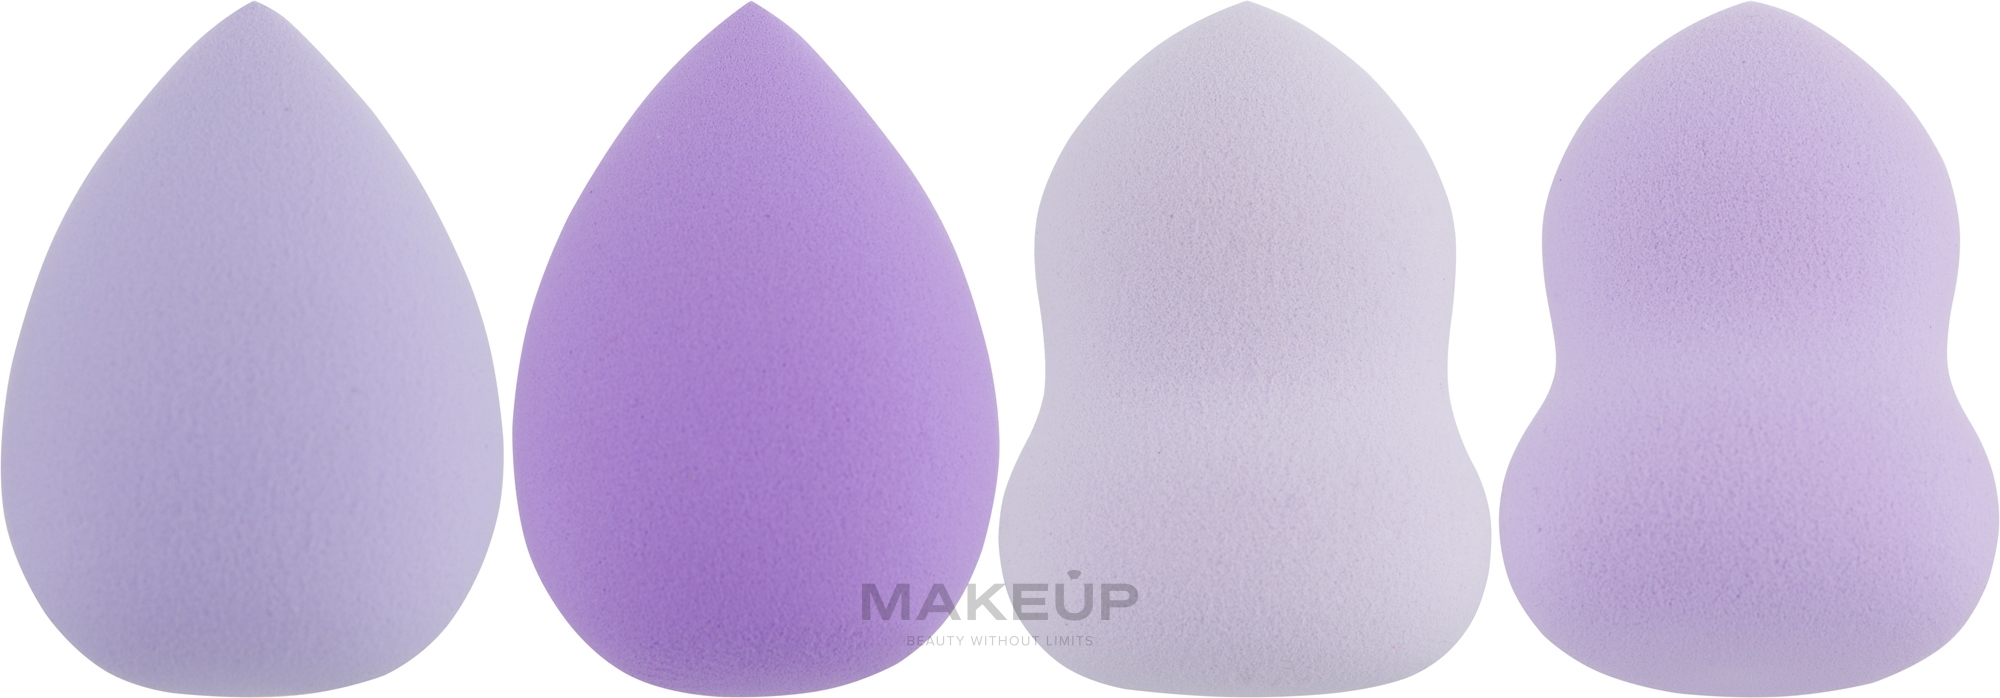 Набор спонжей для макияжа 4 в 1, Pf-298, фиолетовые - Puffic Fashion — фото 4шт